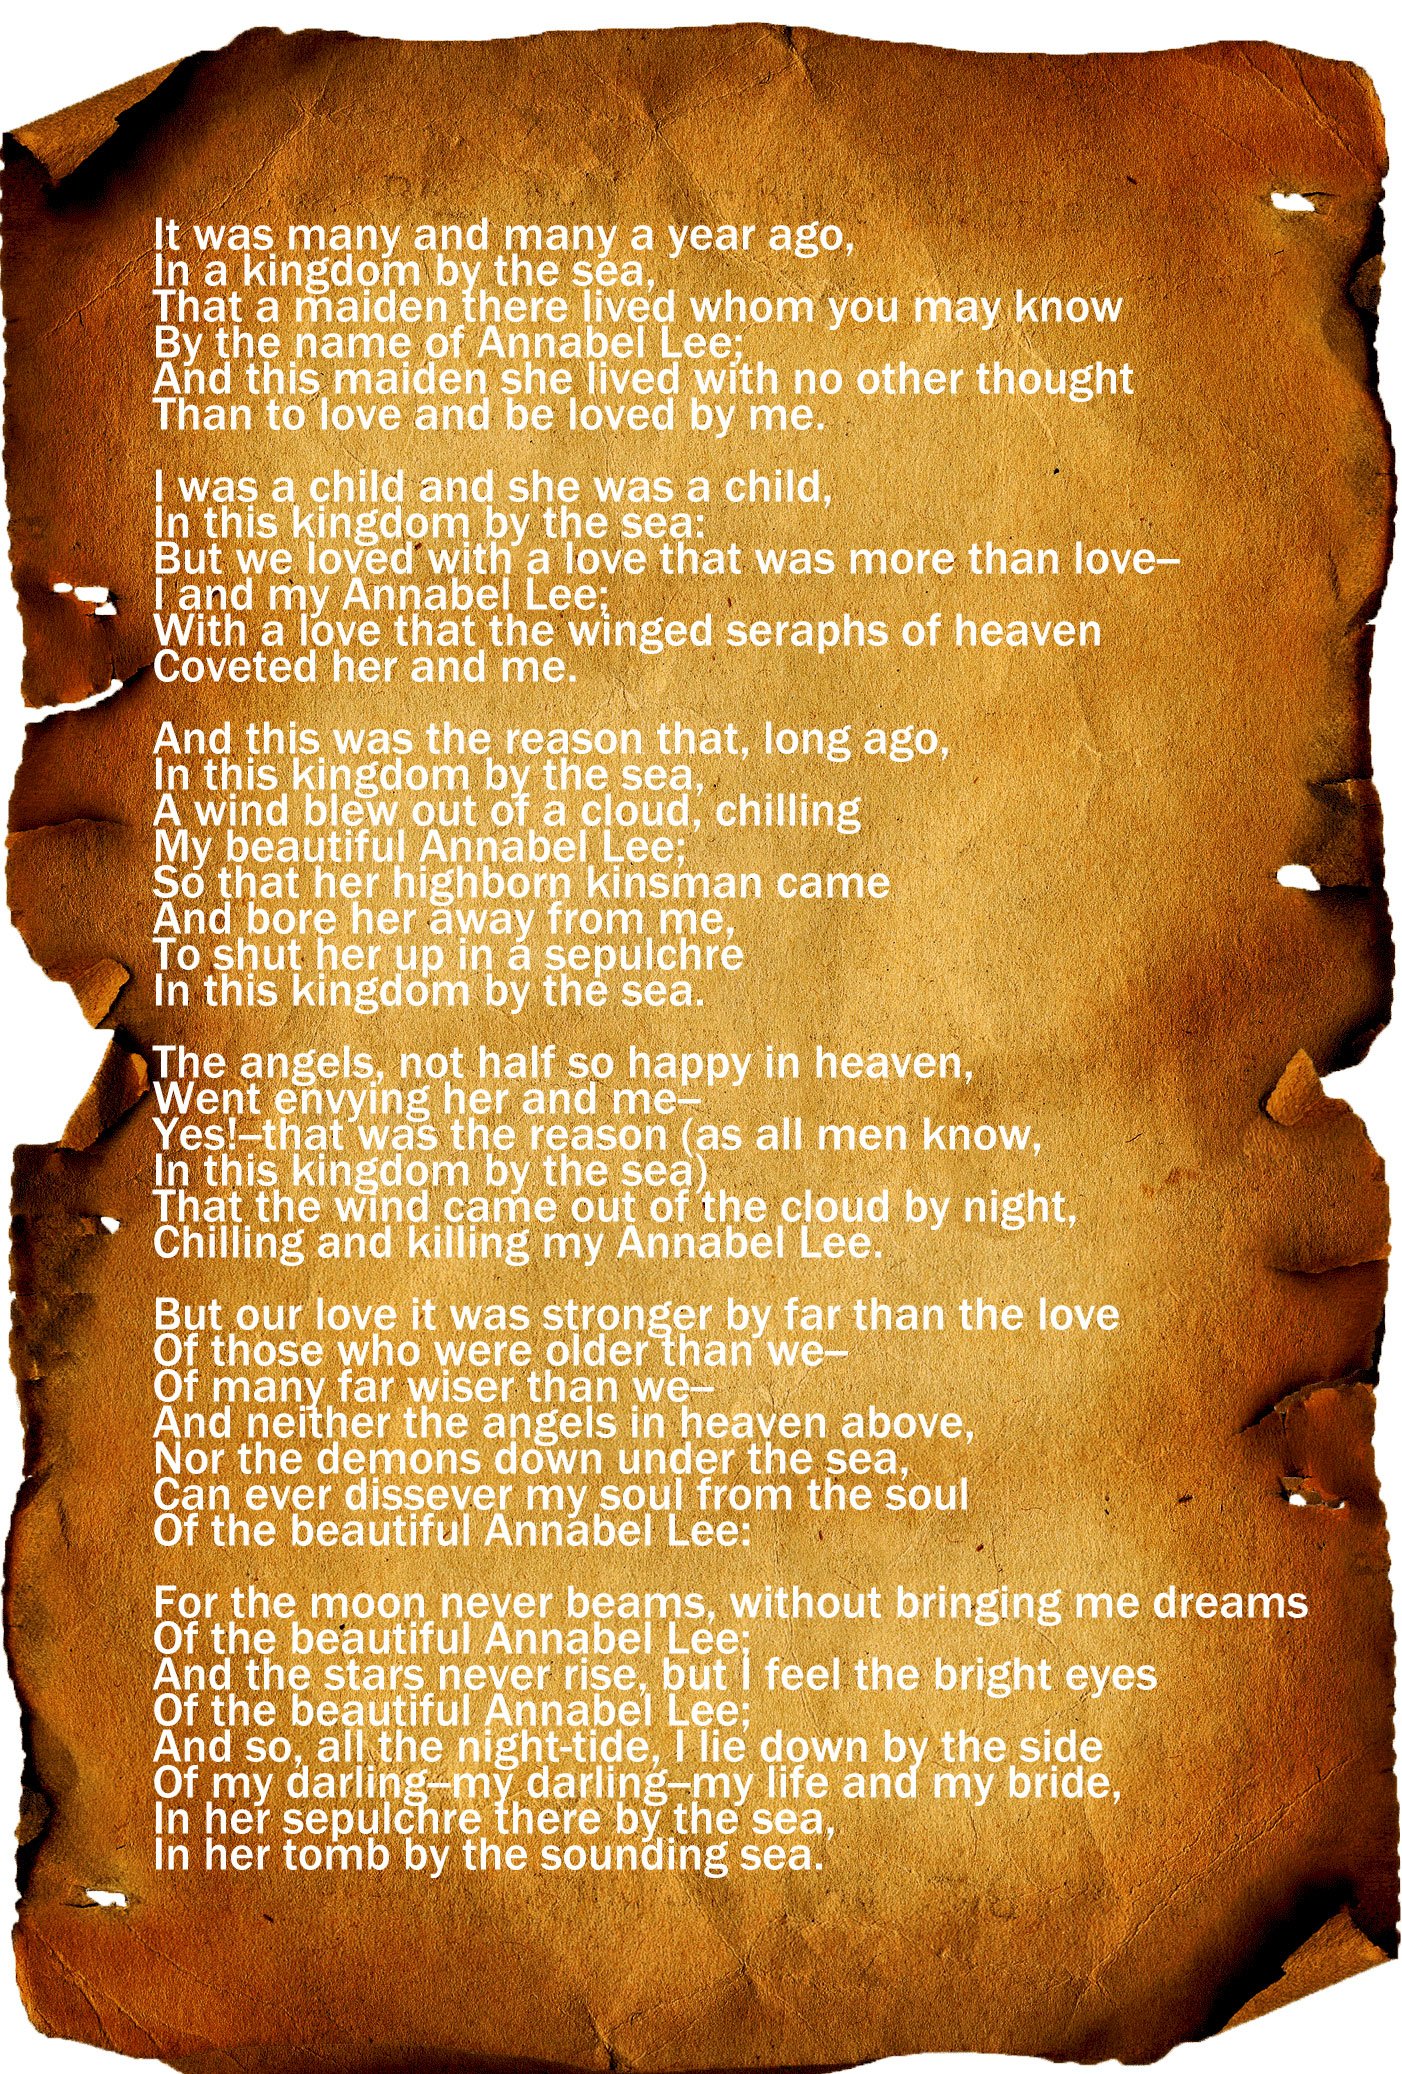 Annabel Lee” by Edgar Allan Poe